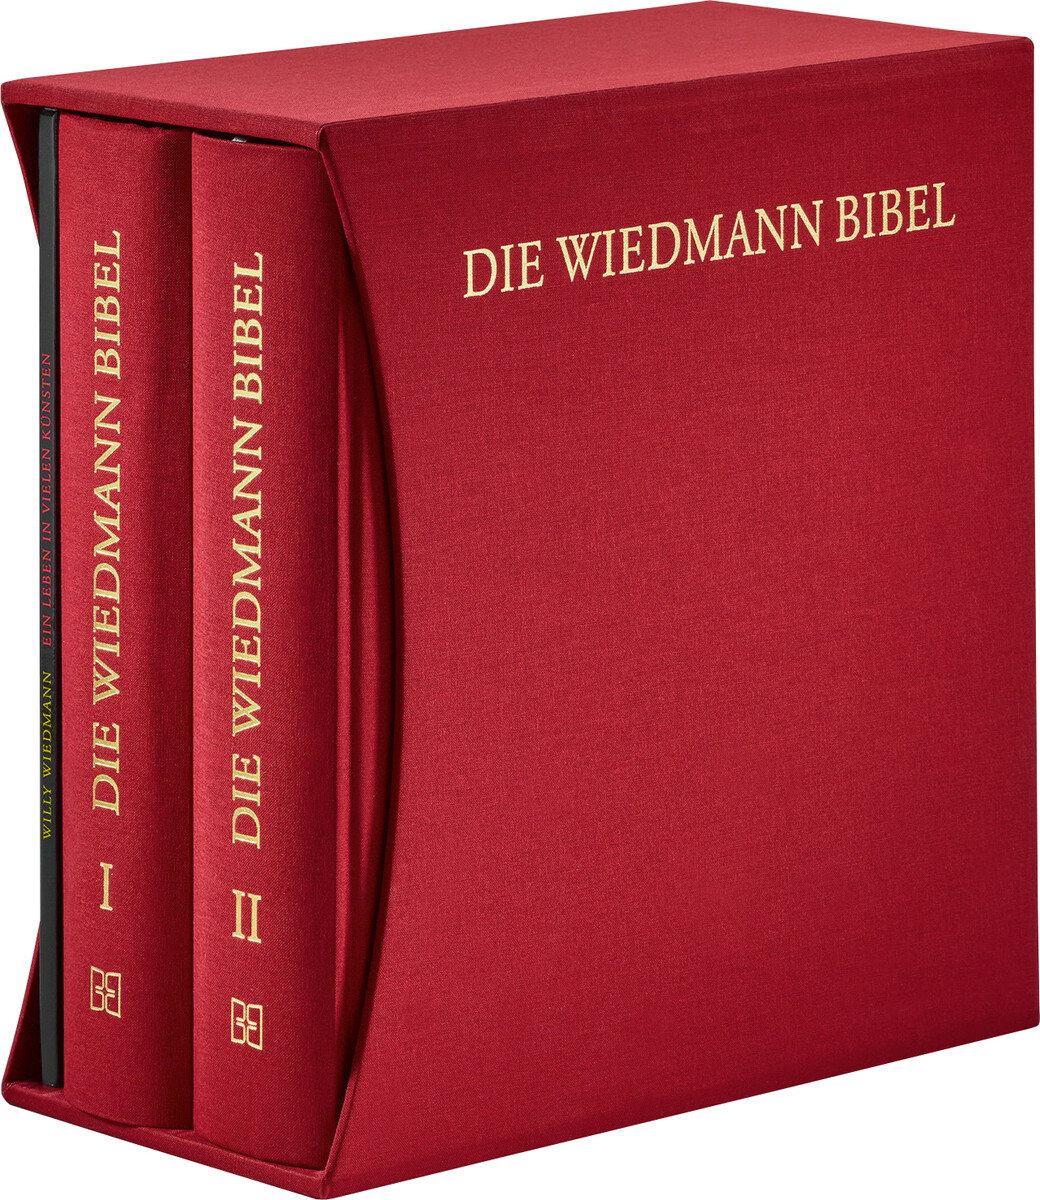 Die Wiedmann Bibel. ART-Edition. Rot